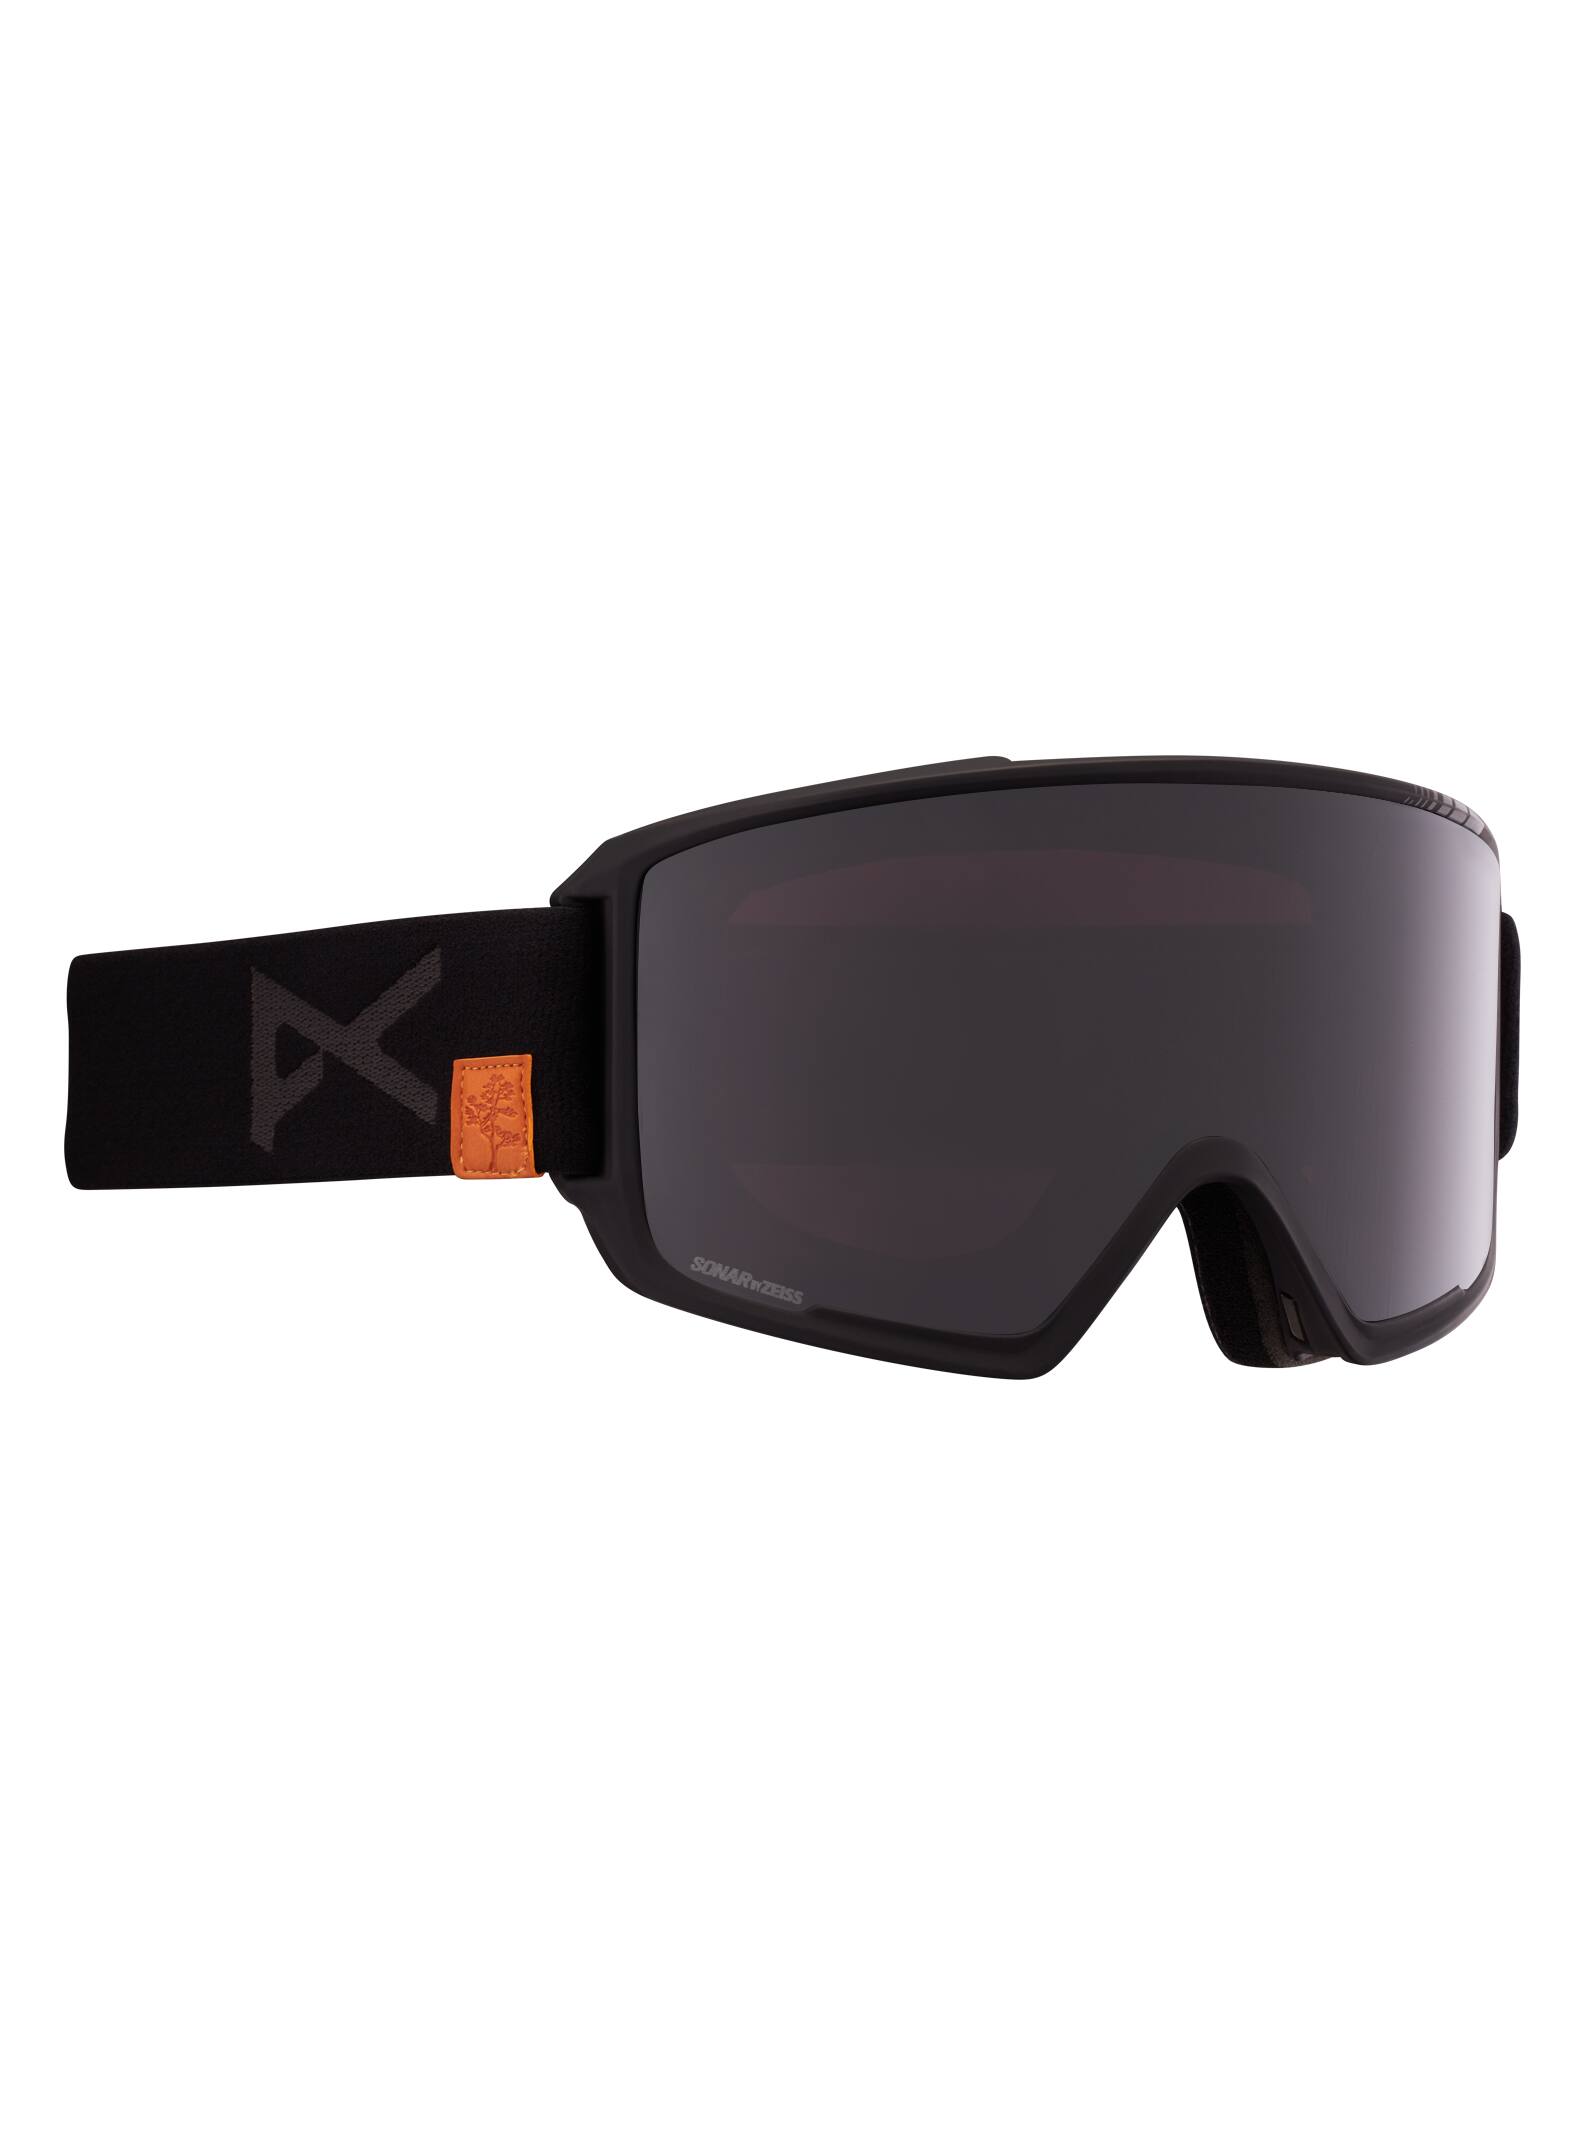 New Anon Haven Renegade & Yellow Gradient Lens Tint Ski & Snowboarding Goggles 